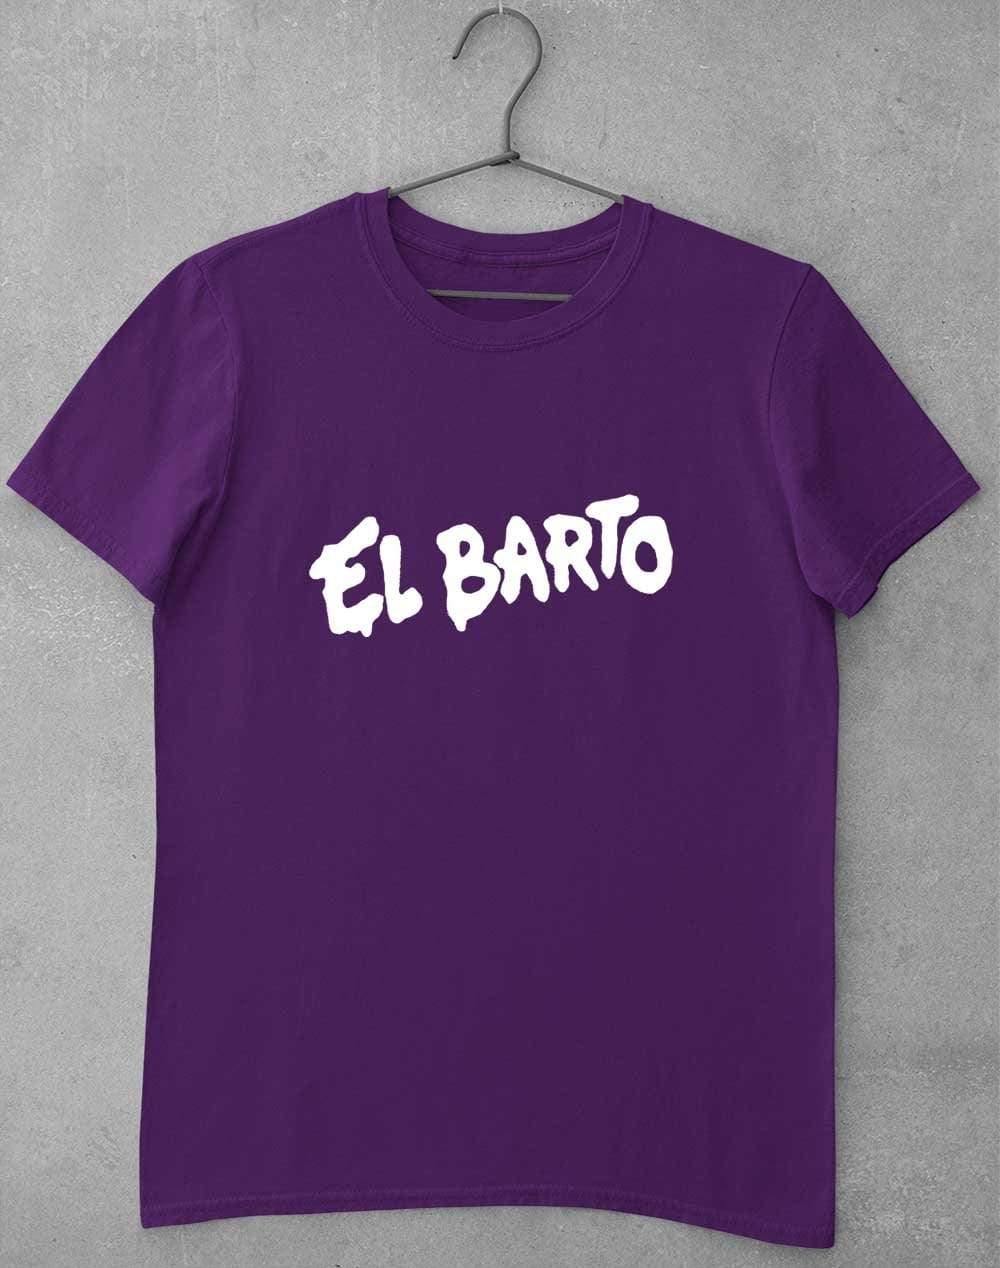 El Barto Tag T-Shirt S / Purple  - Off World Tees